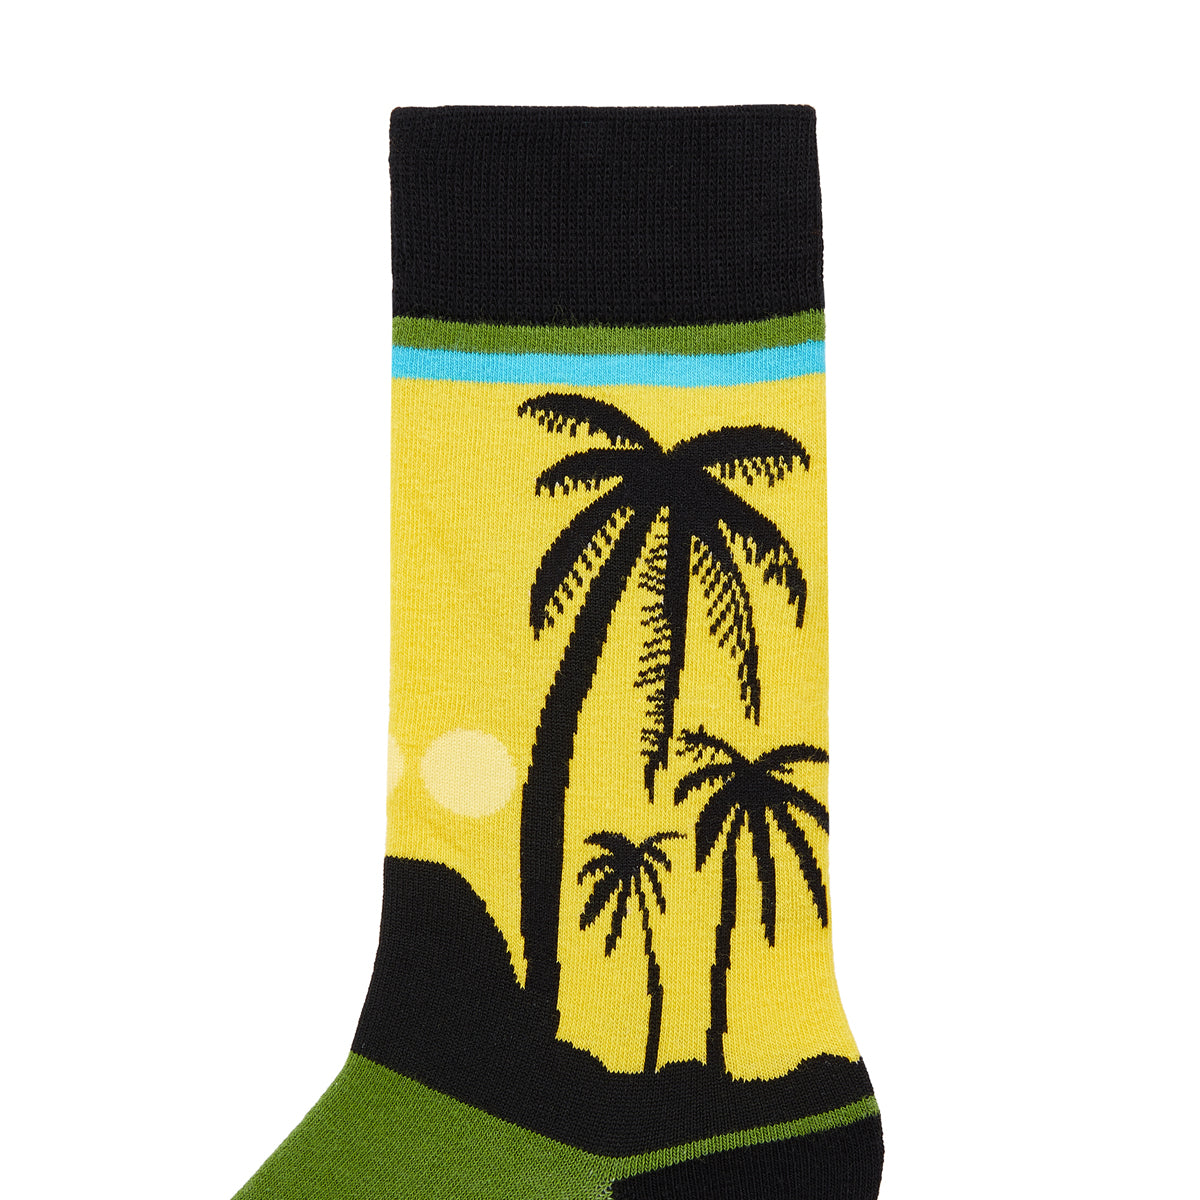 Coconut Tree Printed Crew Length Socks - IDENTITY Apparel Shop